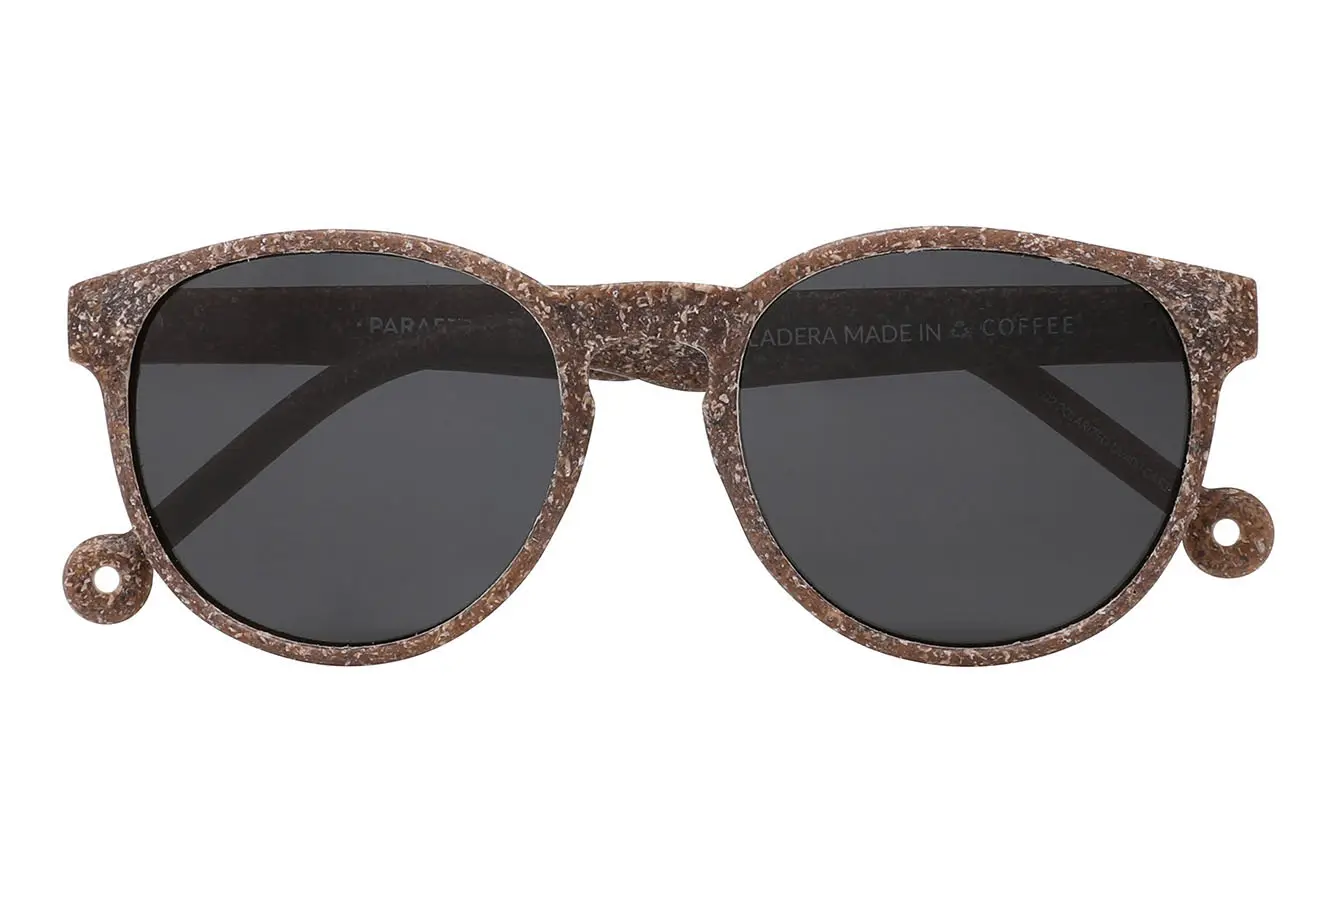 Parafina Eco Friendly Sunglasses - Ladera Natural Coffee